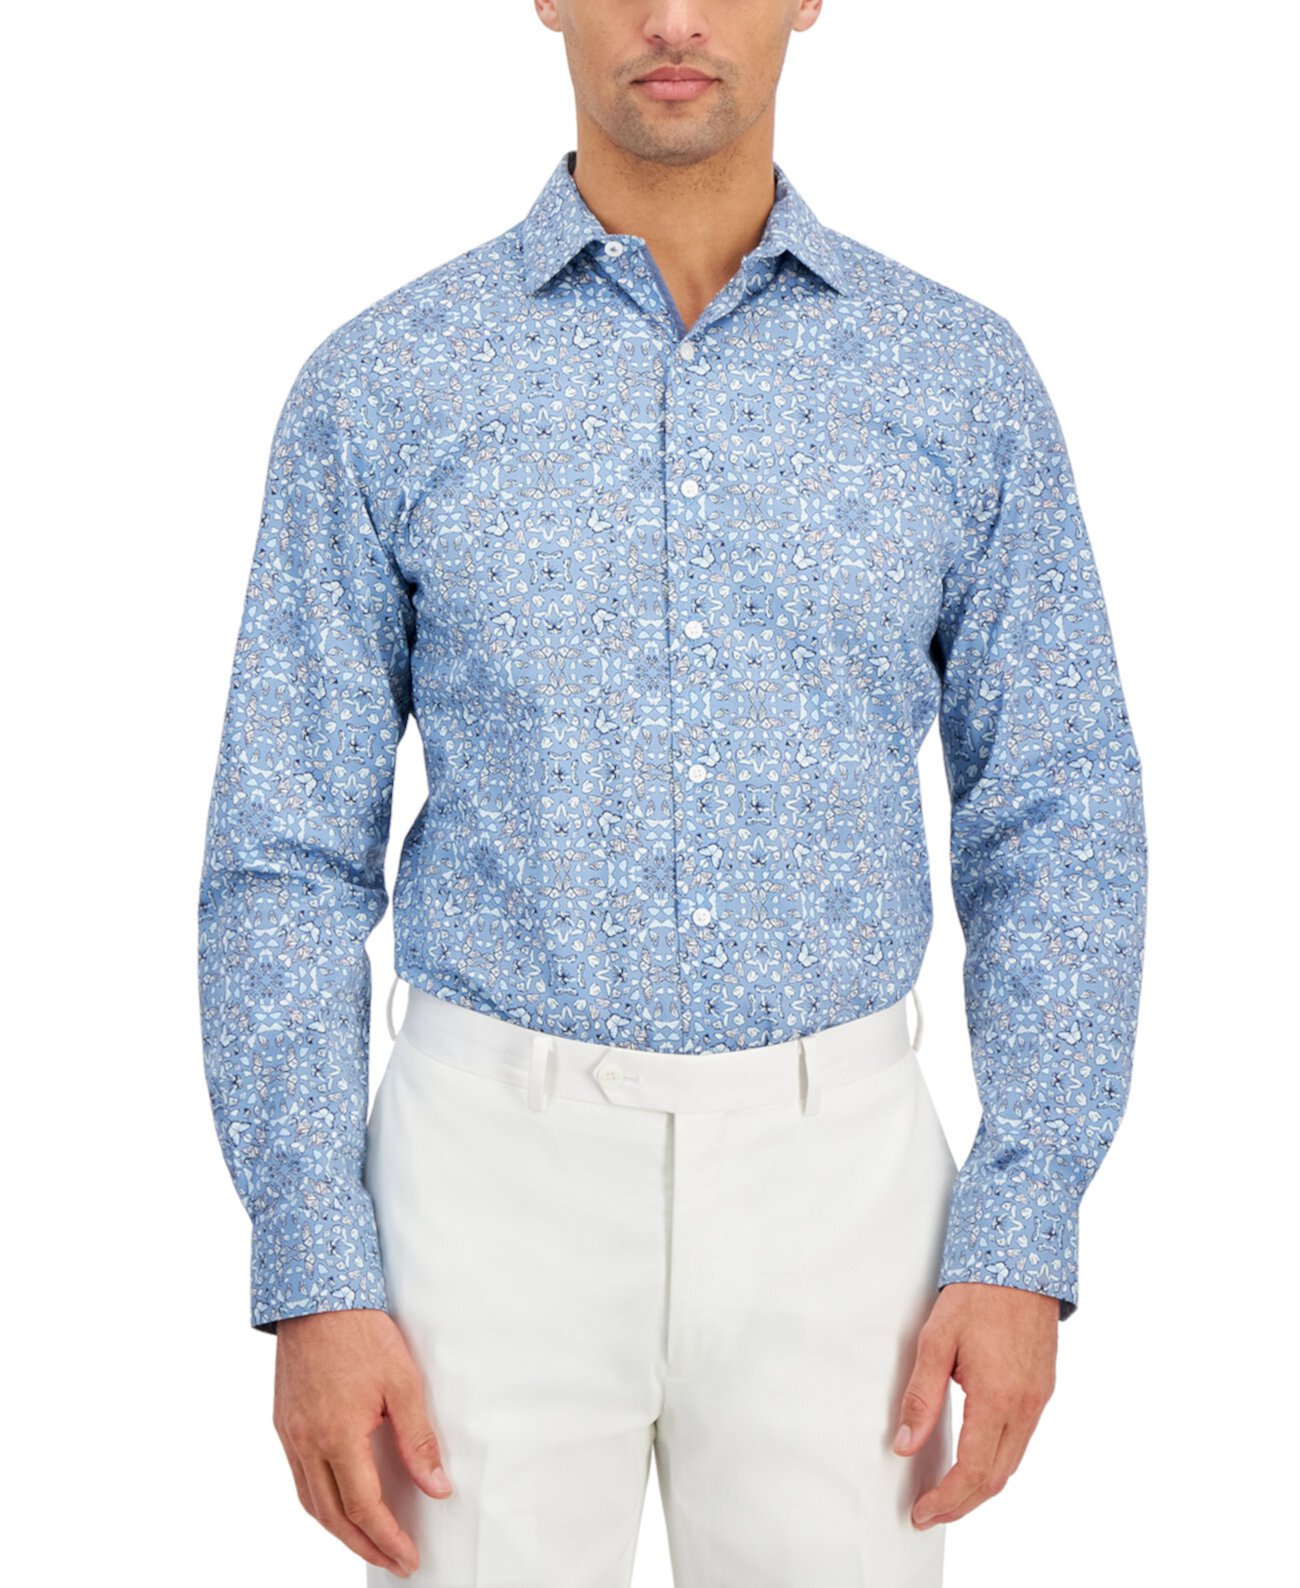 Men's Butterfly Pattern Dress Shirt, Created for Macy's Bar III